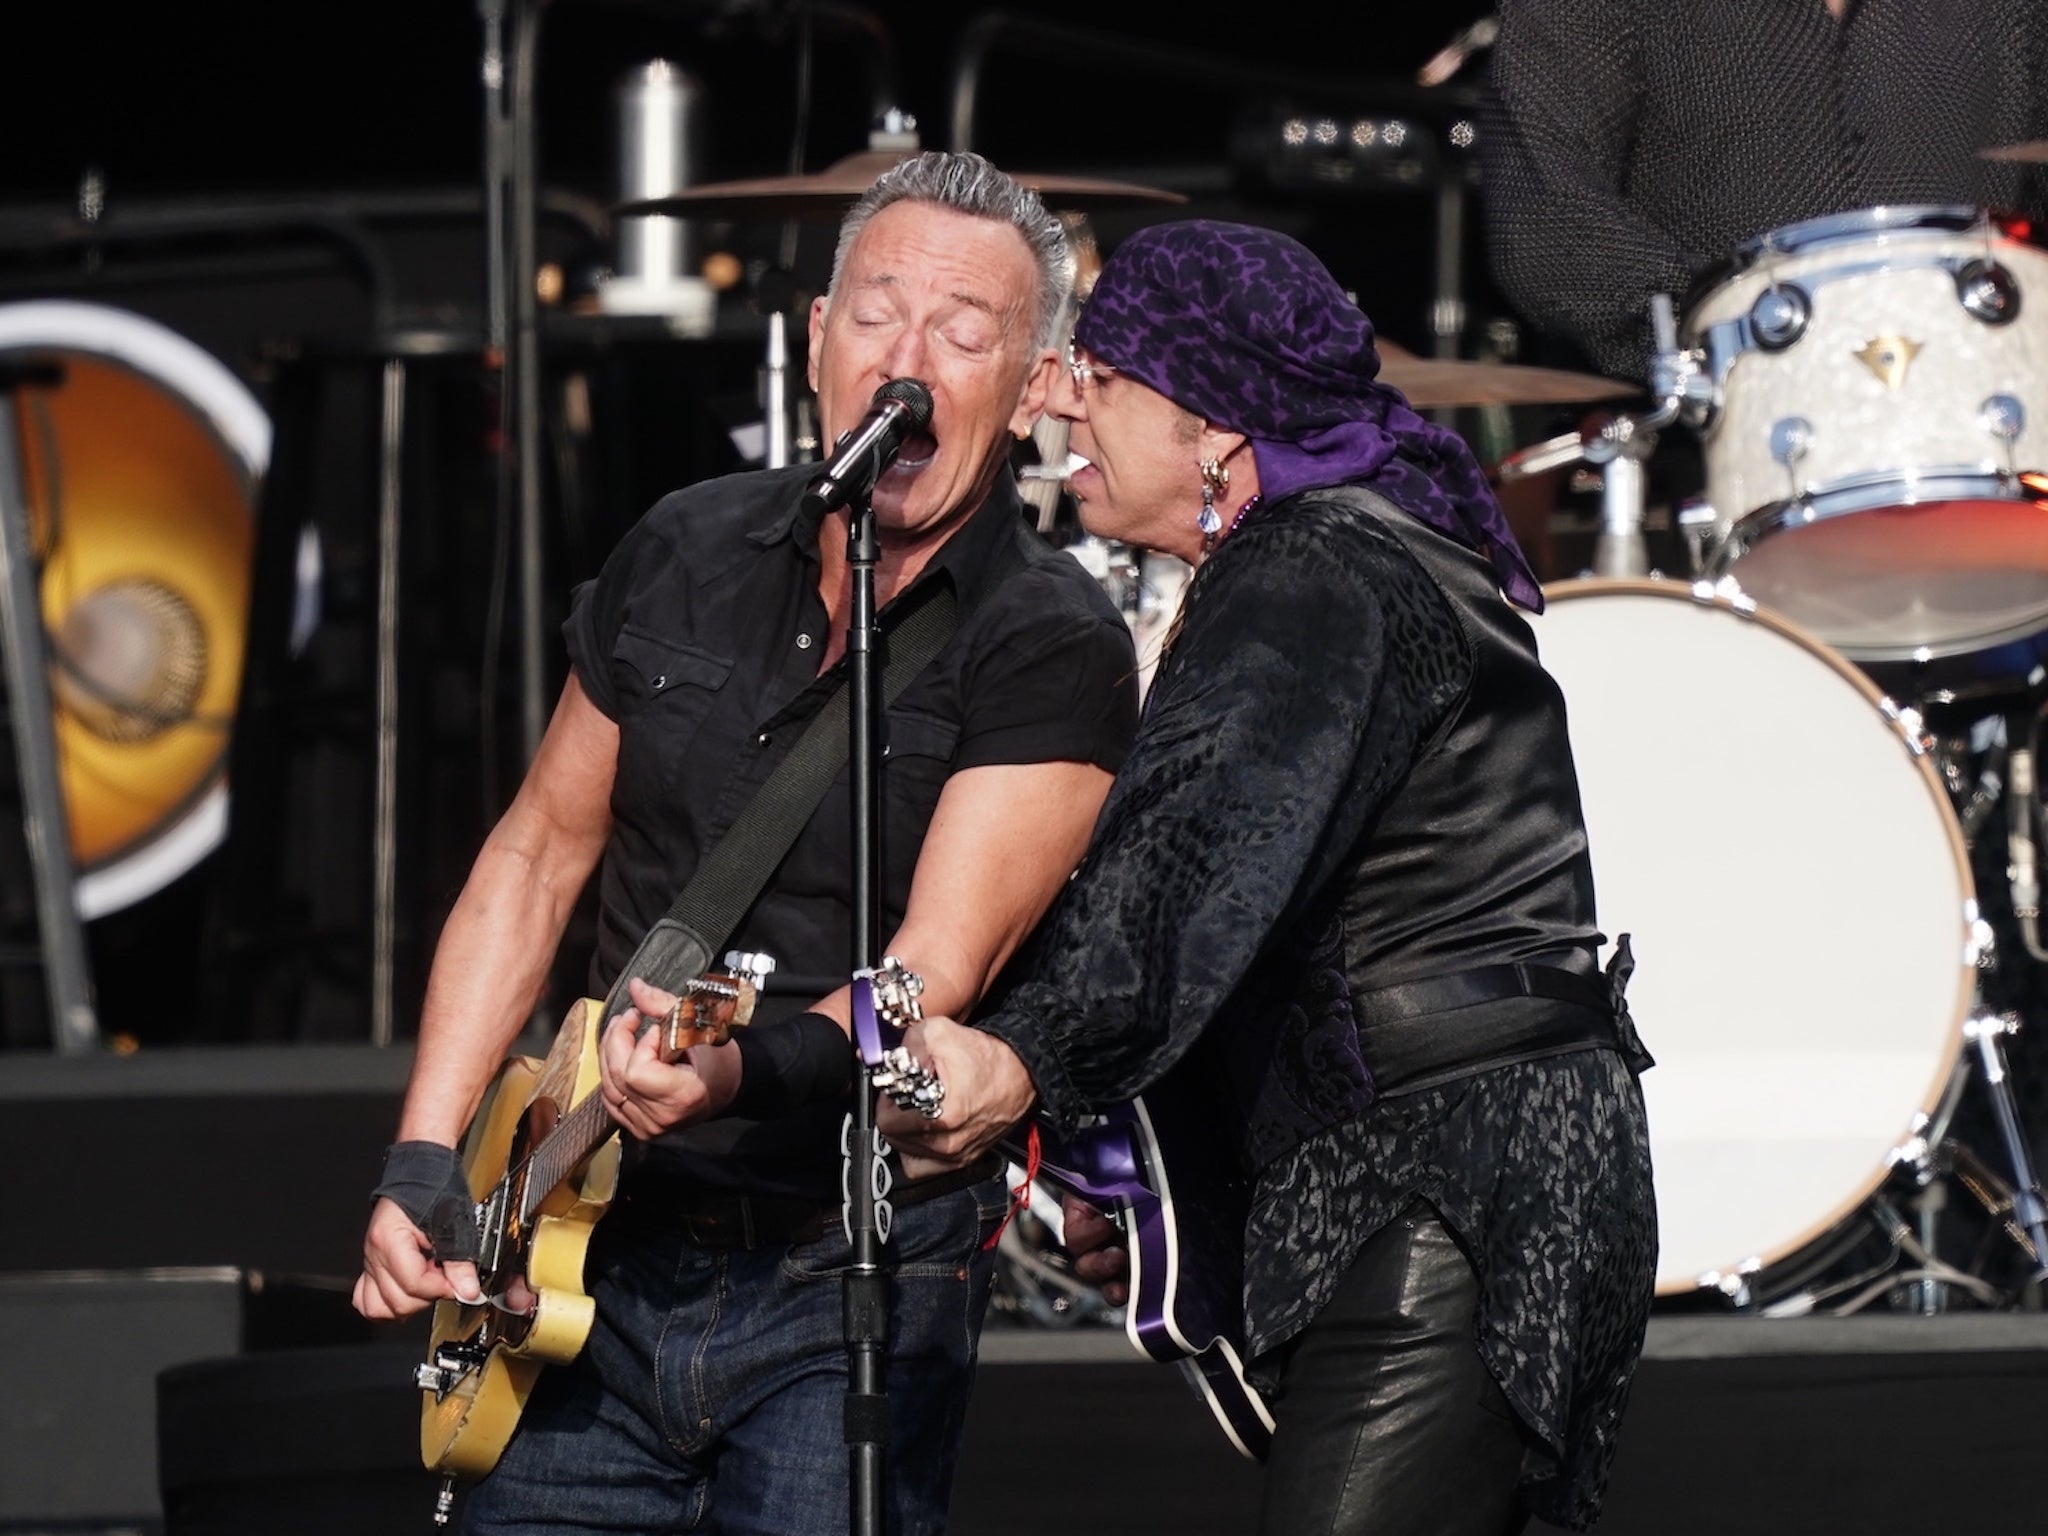 Bruce Springsteen and Steven Van Zandt together on stage in Hyde Park on Thursday 6 July